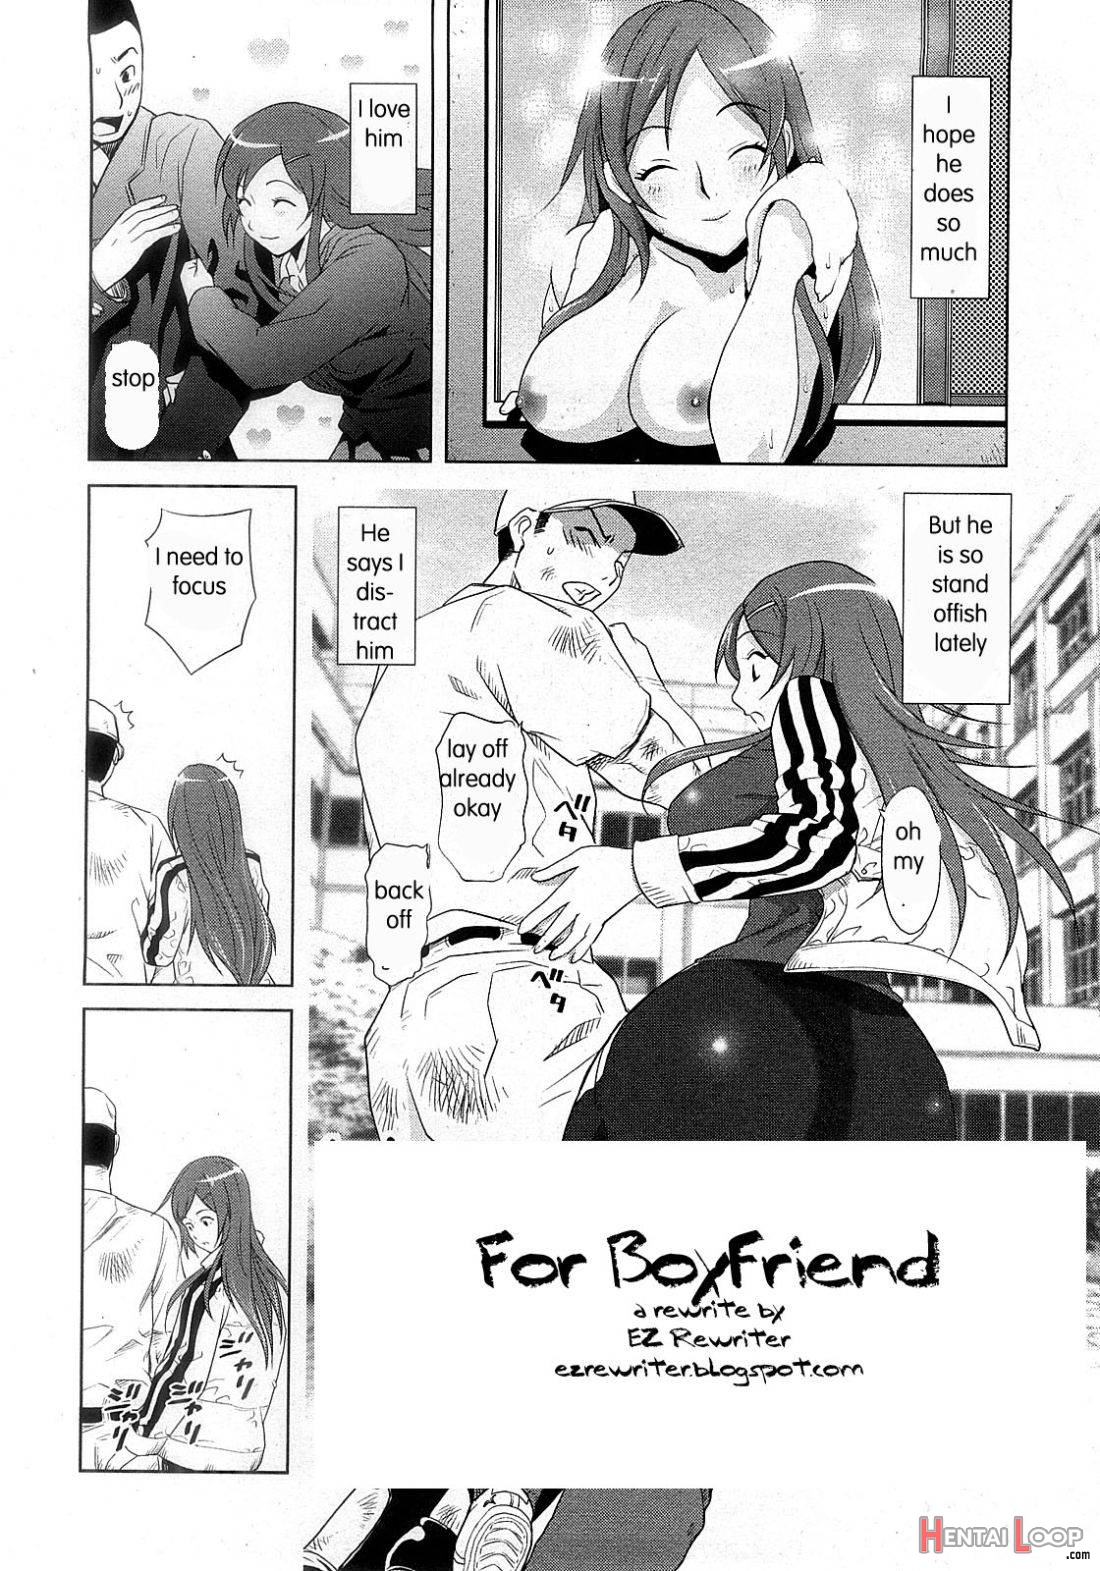 For Boyfriend page 2